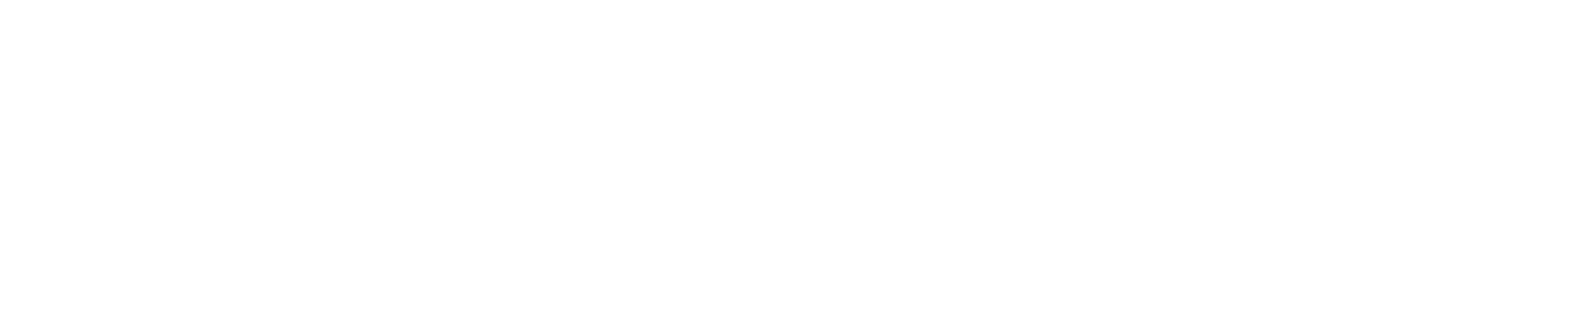 Ceragon Networks Logo groß für dunkle Hintergründe (transparentes PNG)